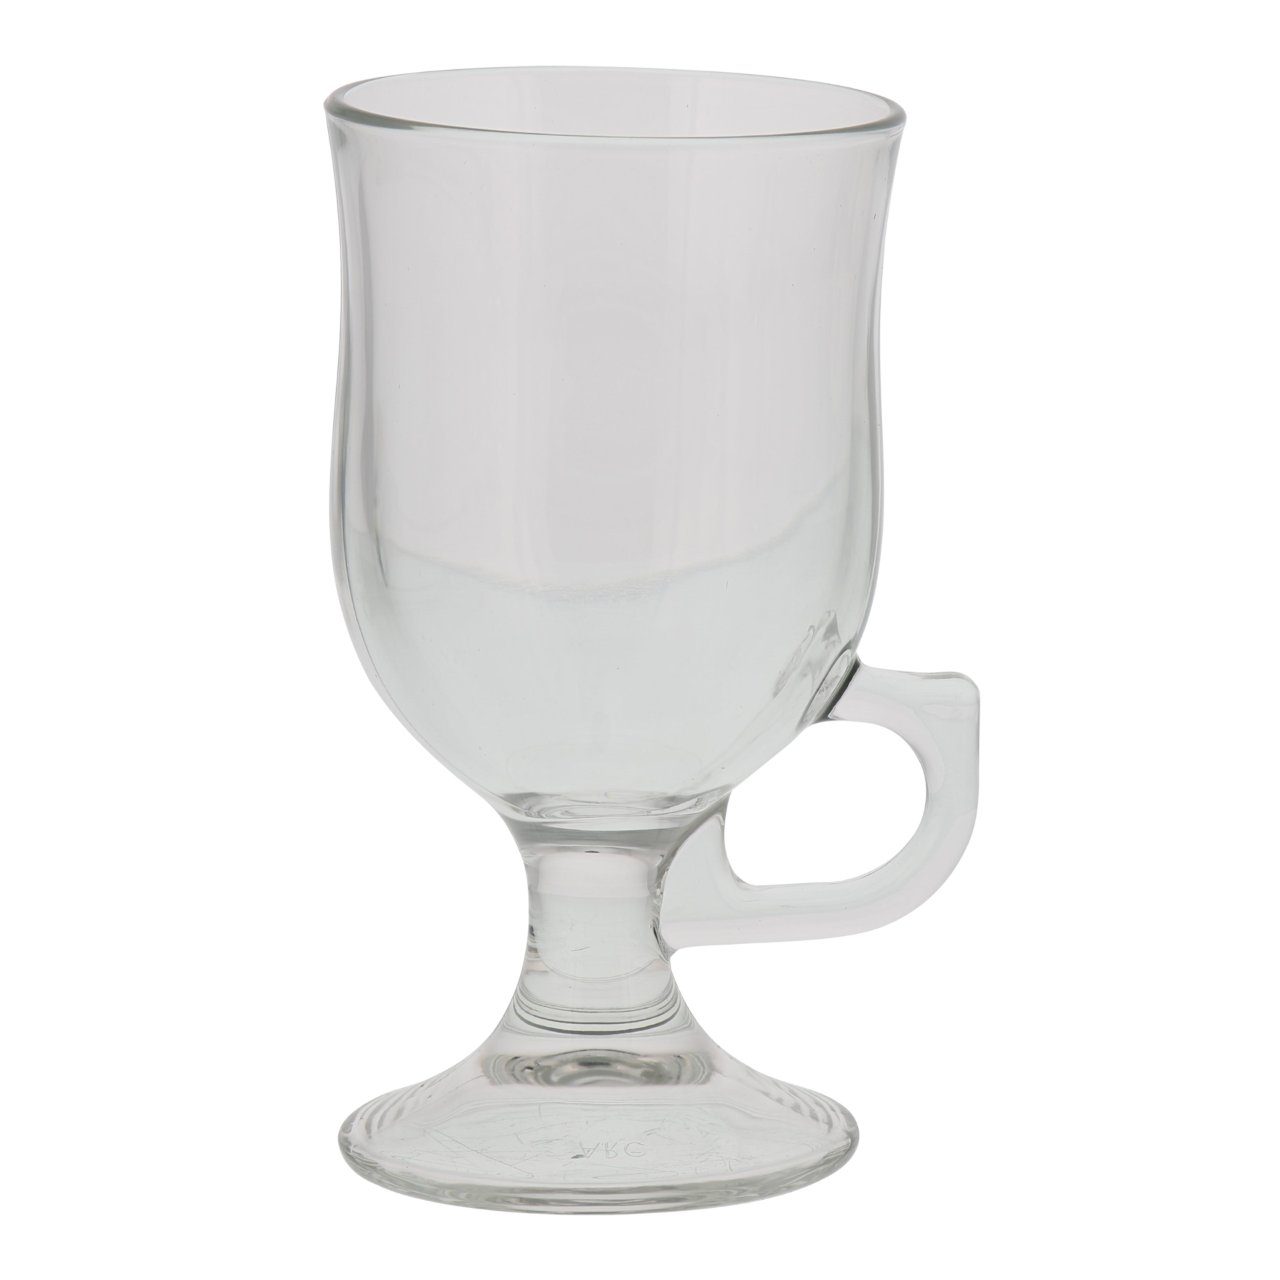 Cardinal Arcoroc Irish Coffee Glass Mug - 8.5 oz